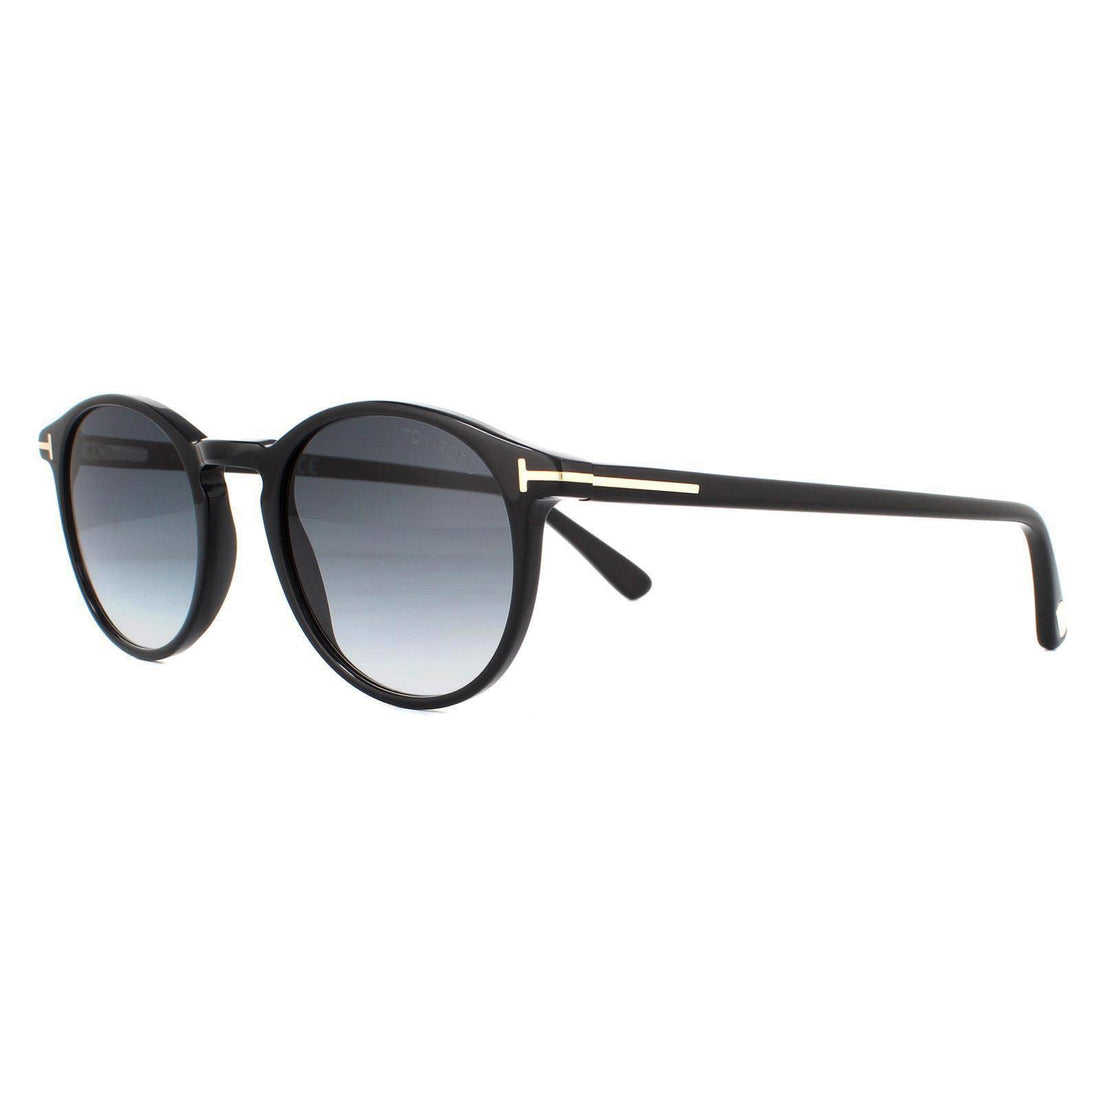 Tom Ford Sunglasses Andrea FT0539 01B Black Grey Gradient